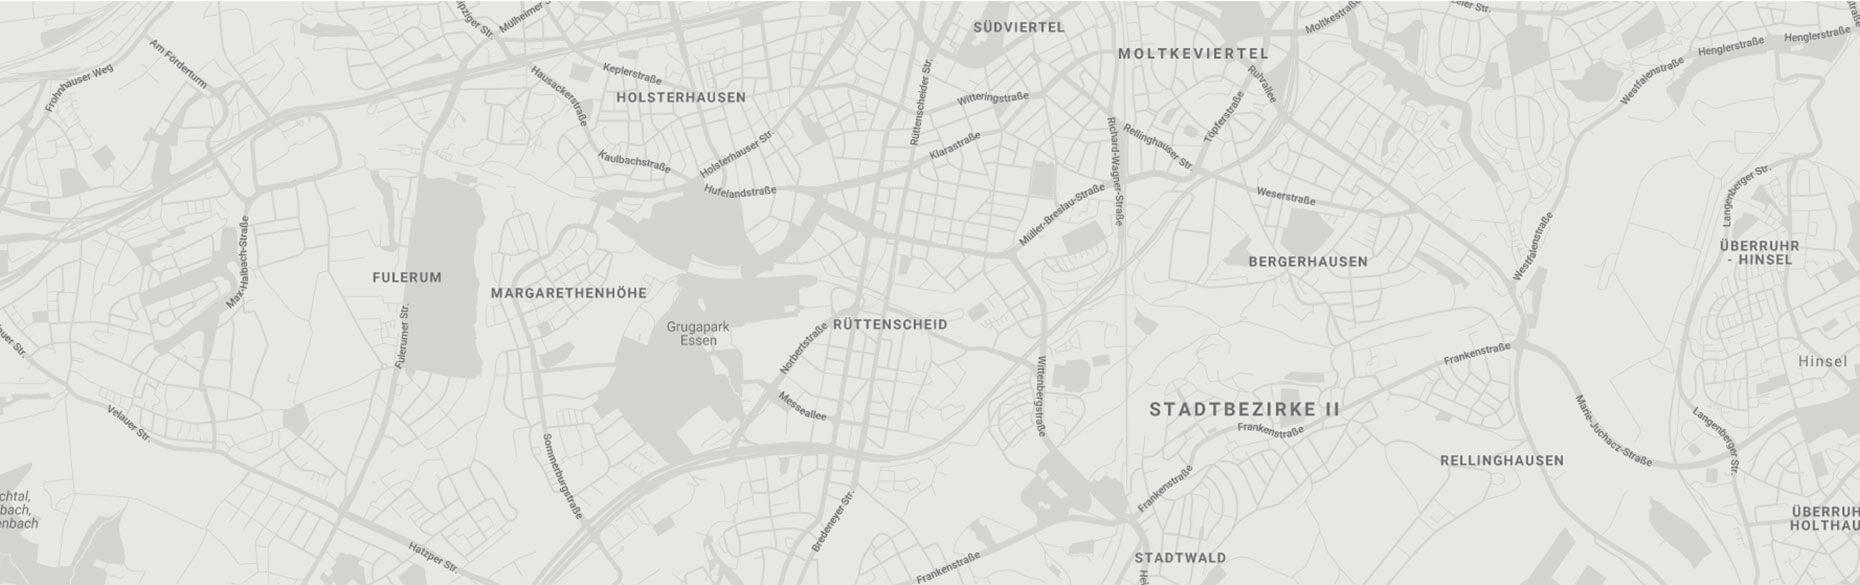 Google Maps – Bellevue aesthetic, Girardetstr. 1-5, 45131 Essen